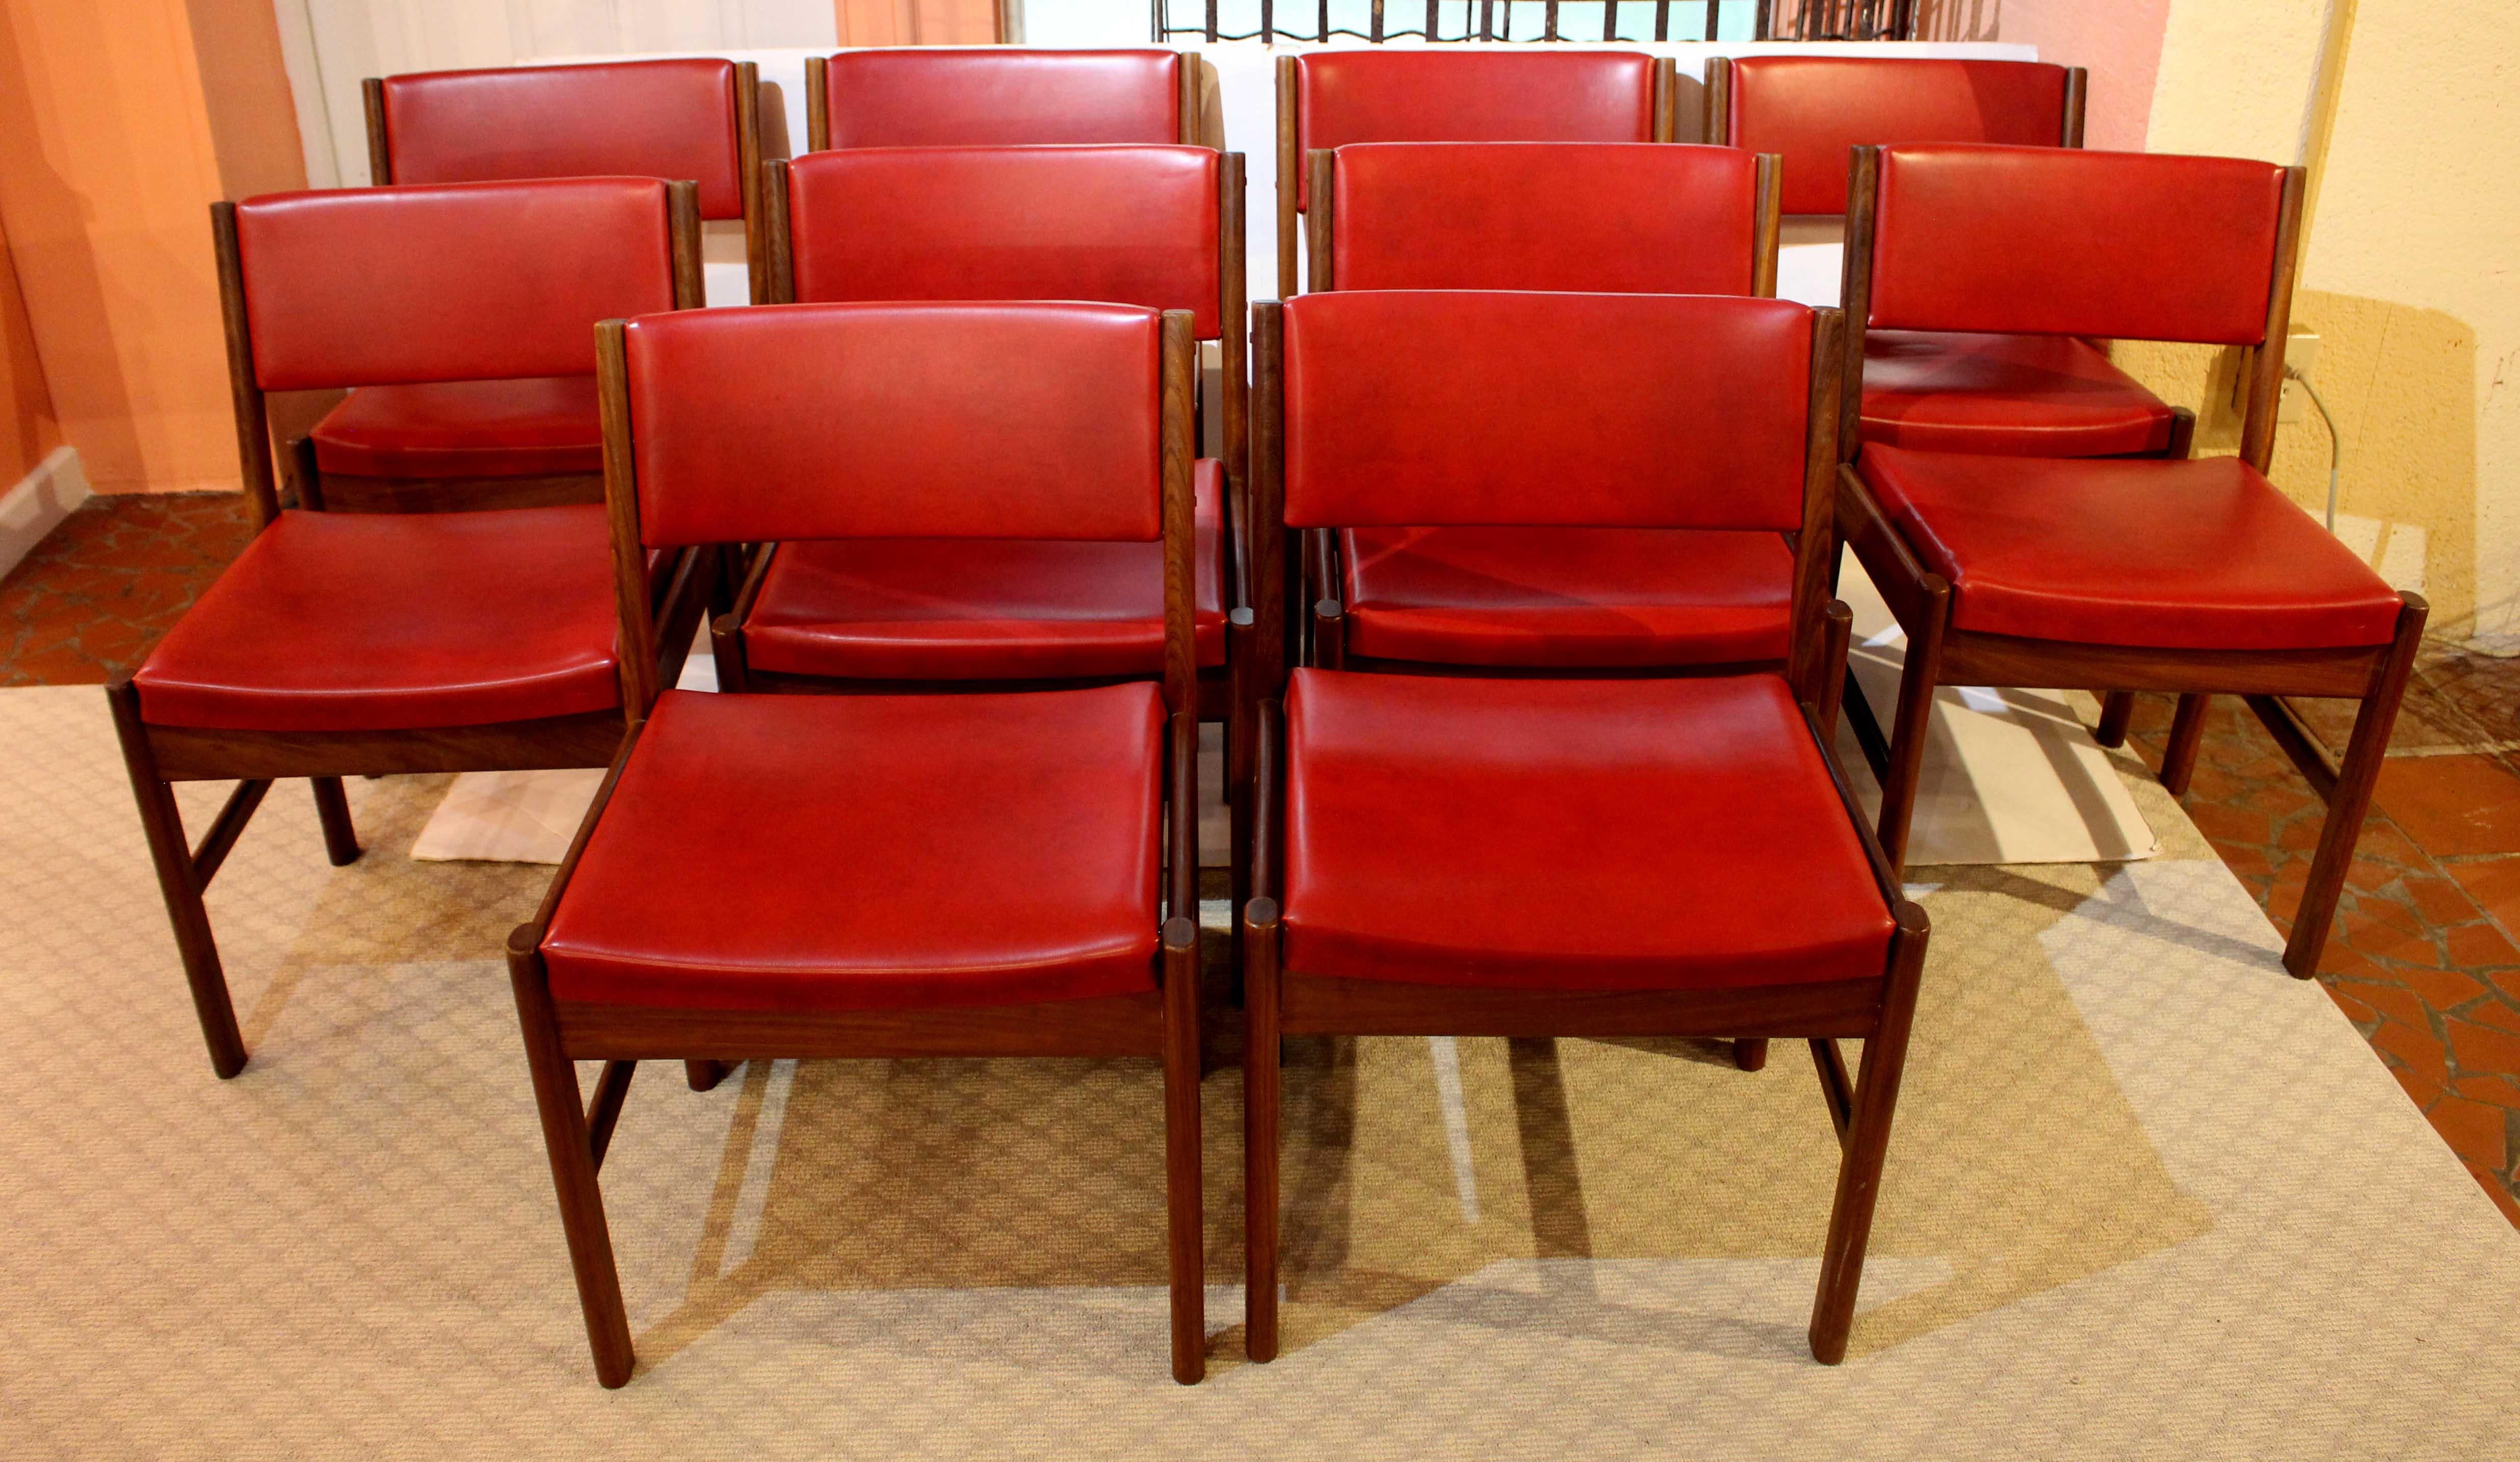 1970s set of 10 mid century modern side chairs, English. Teak with original red vinyl upholstered backs & seats. Stylishly molded legs, sides & backs. 19